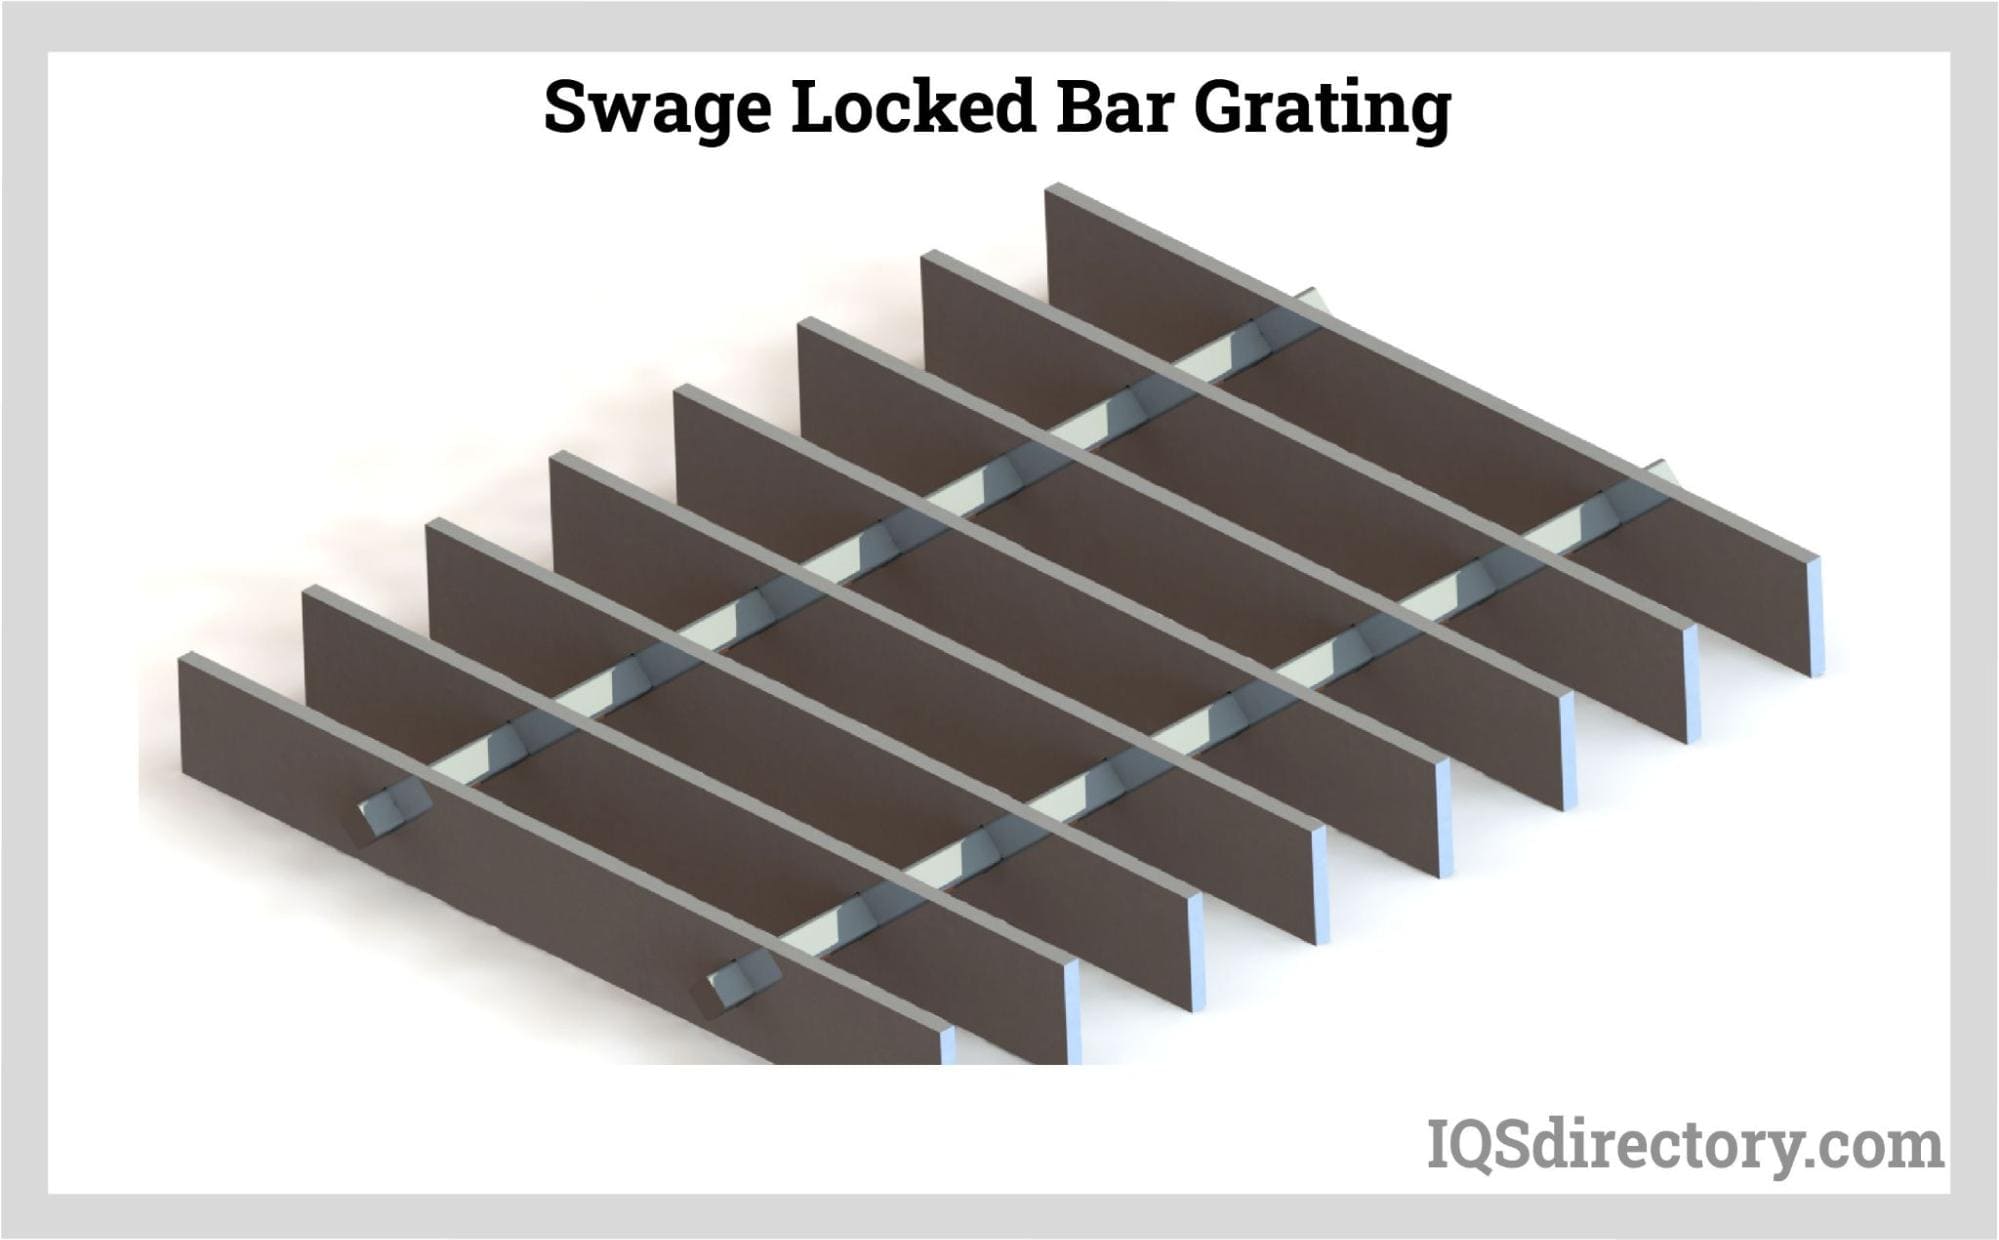 Swage Locked Bar Grating